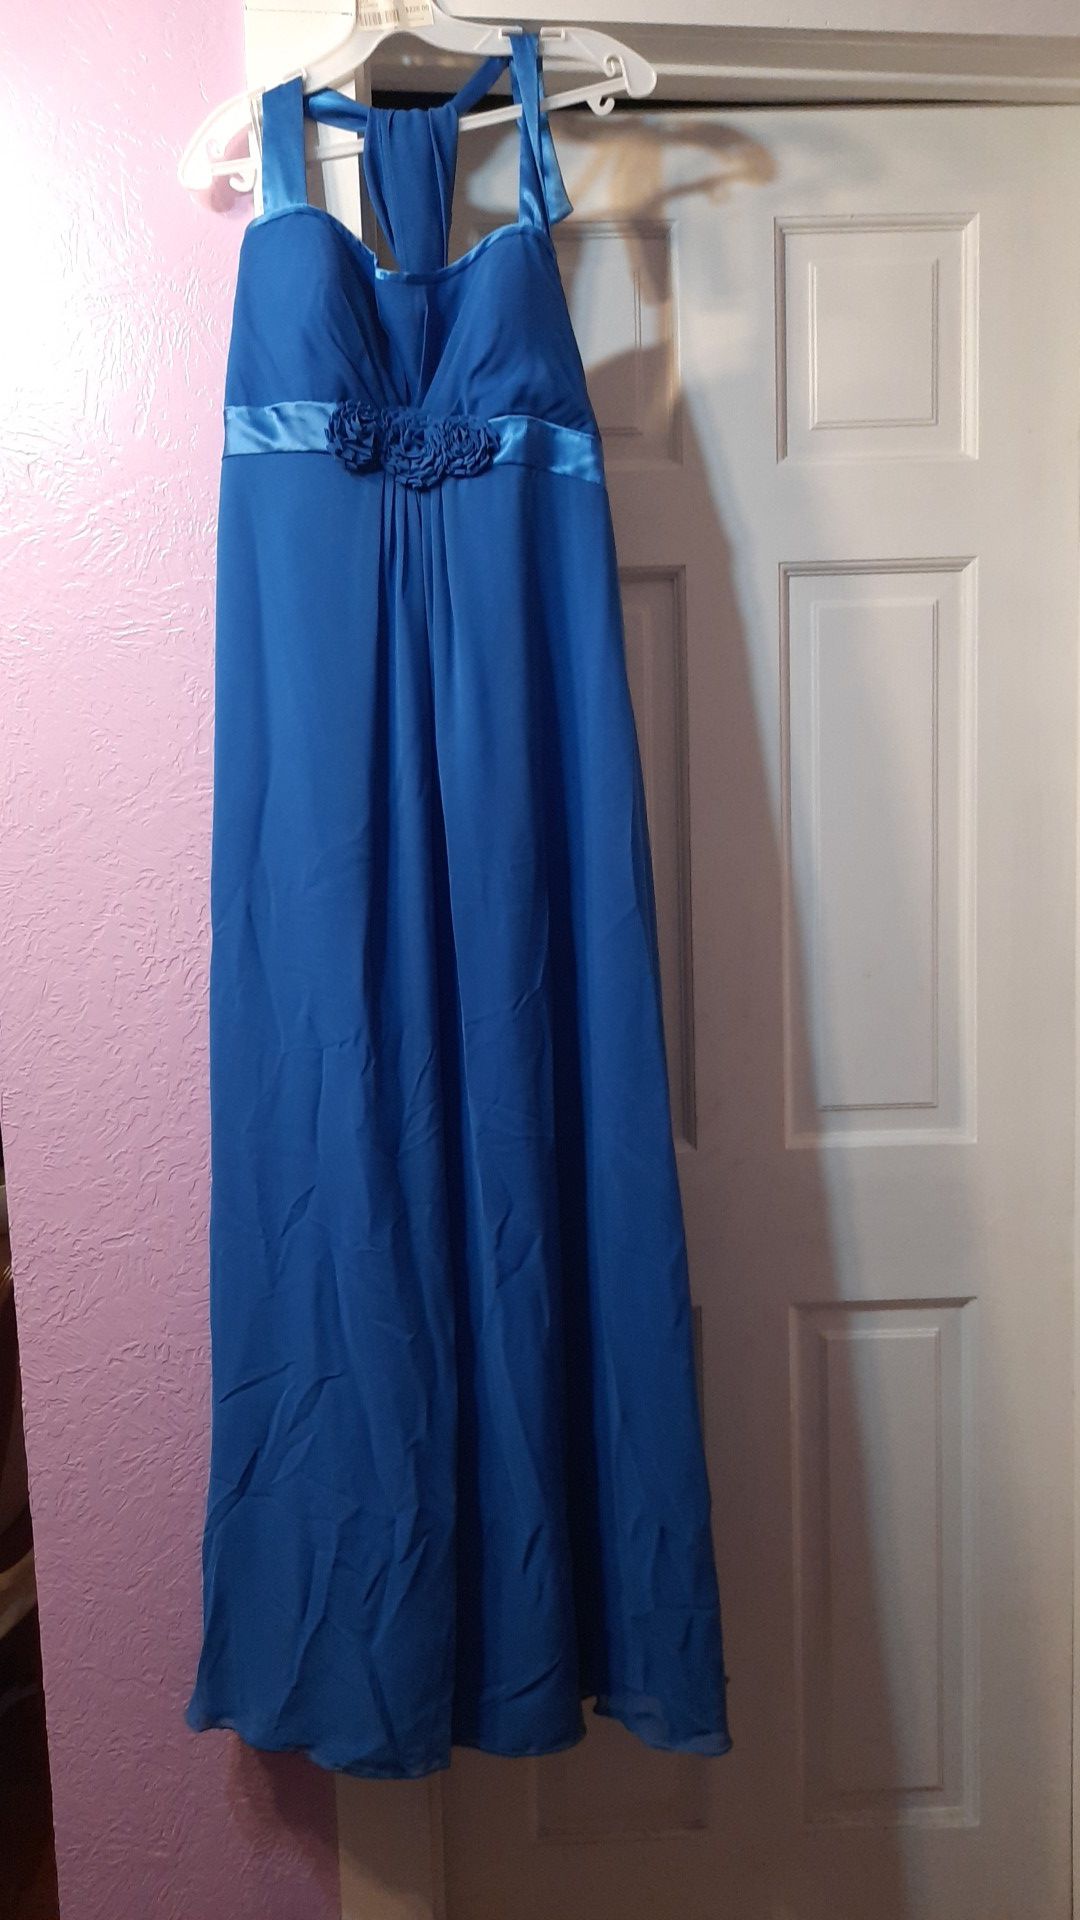 Ladies dress size 14